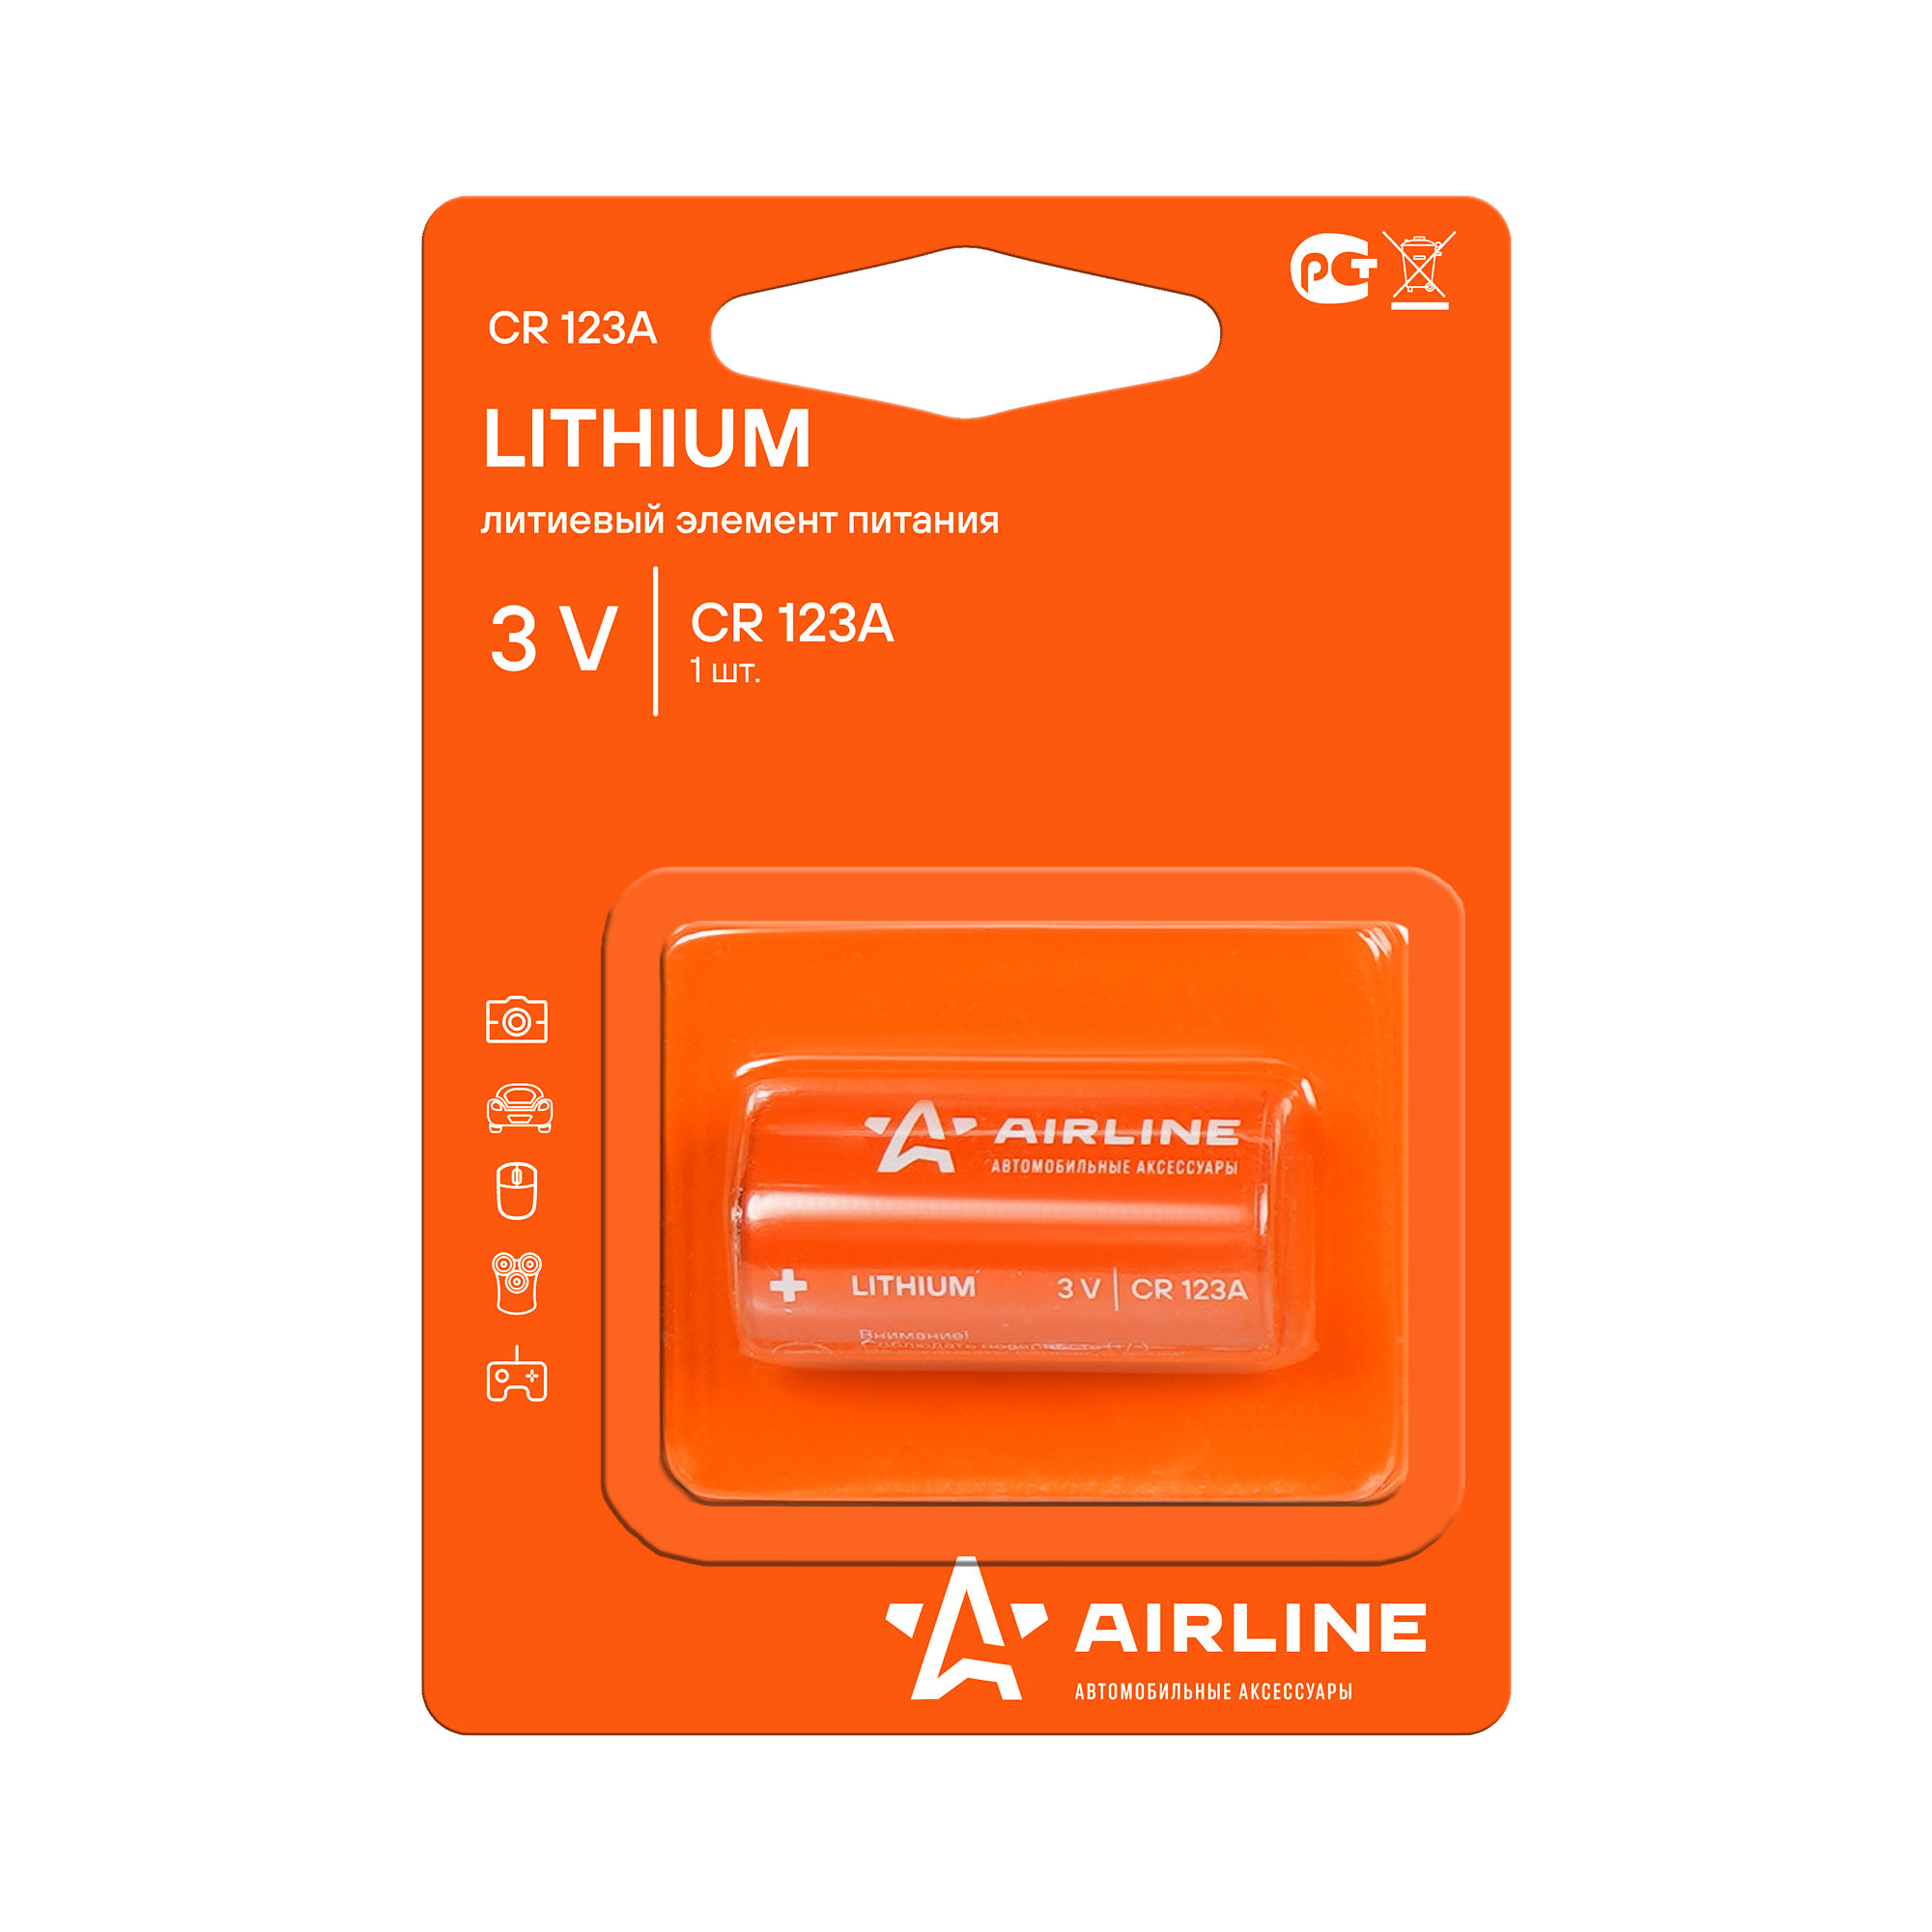 Батарейка литиевая AIRLINE Lithium CR123A 3V упаковка 1 шт. CR123A-01 батарейка airline cr163201